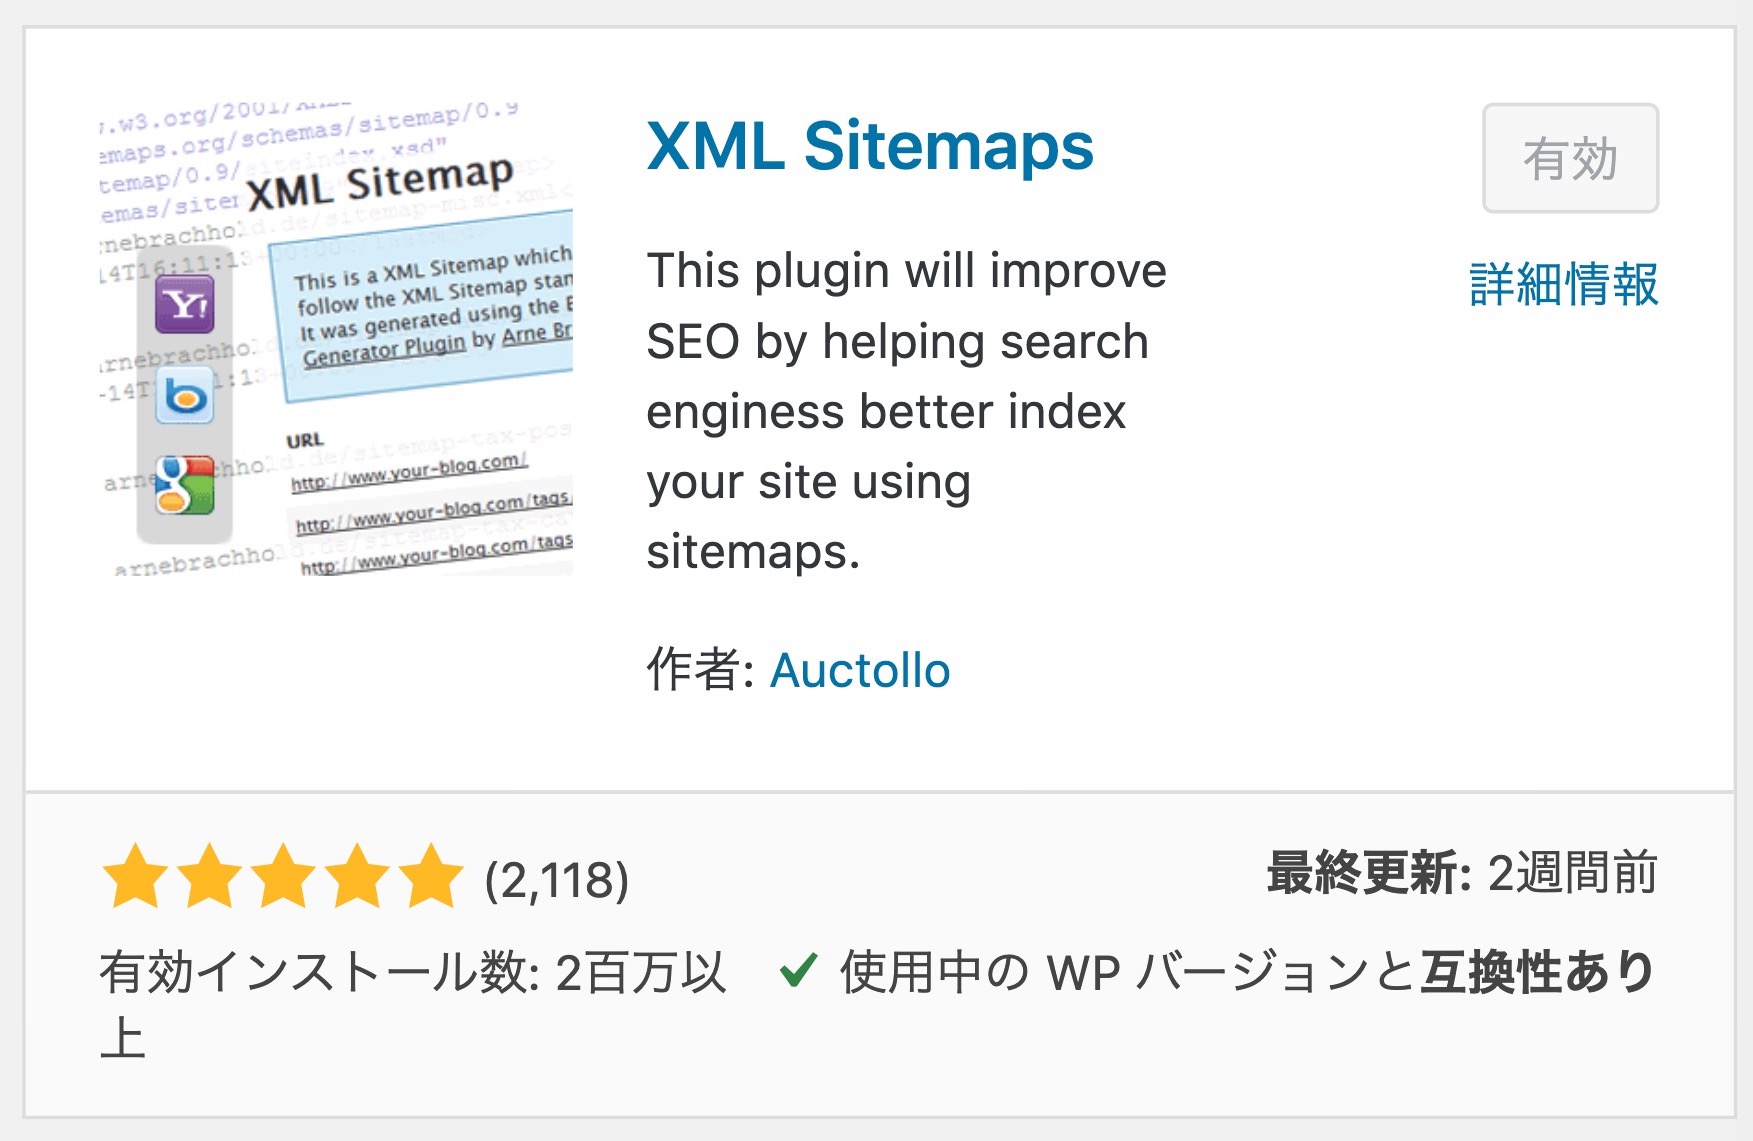 Google-XML-Sitemaps